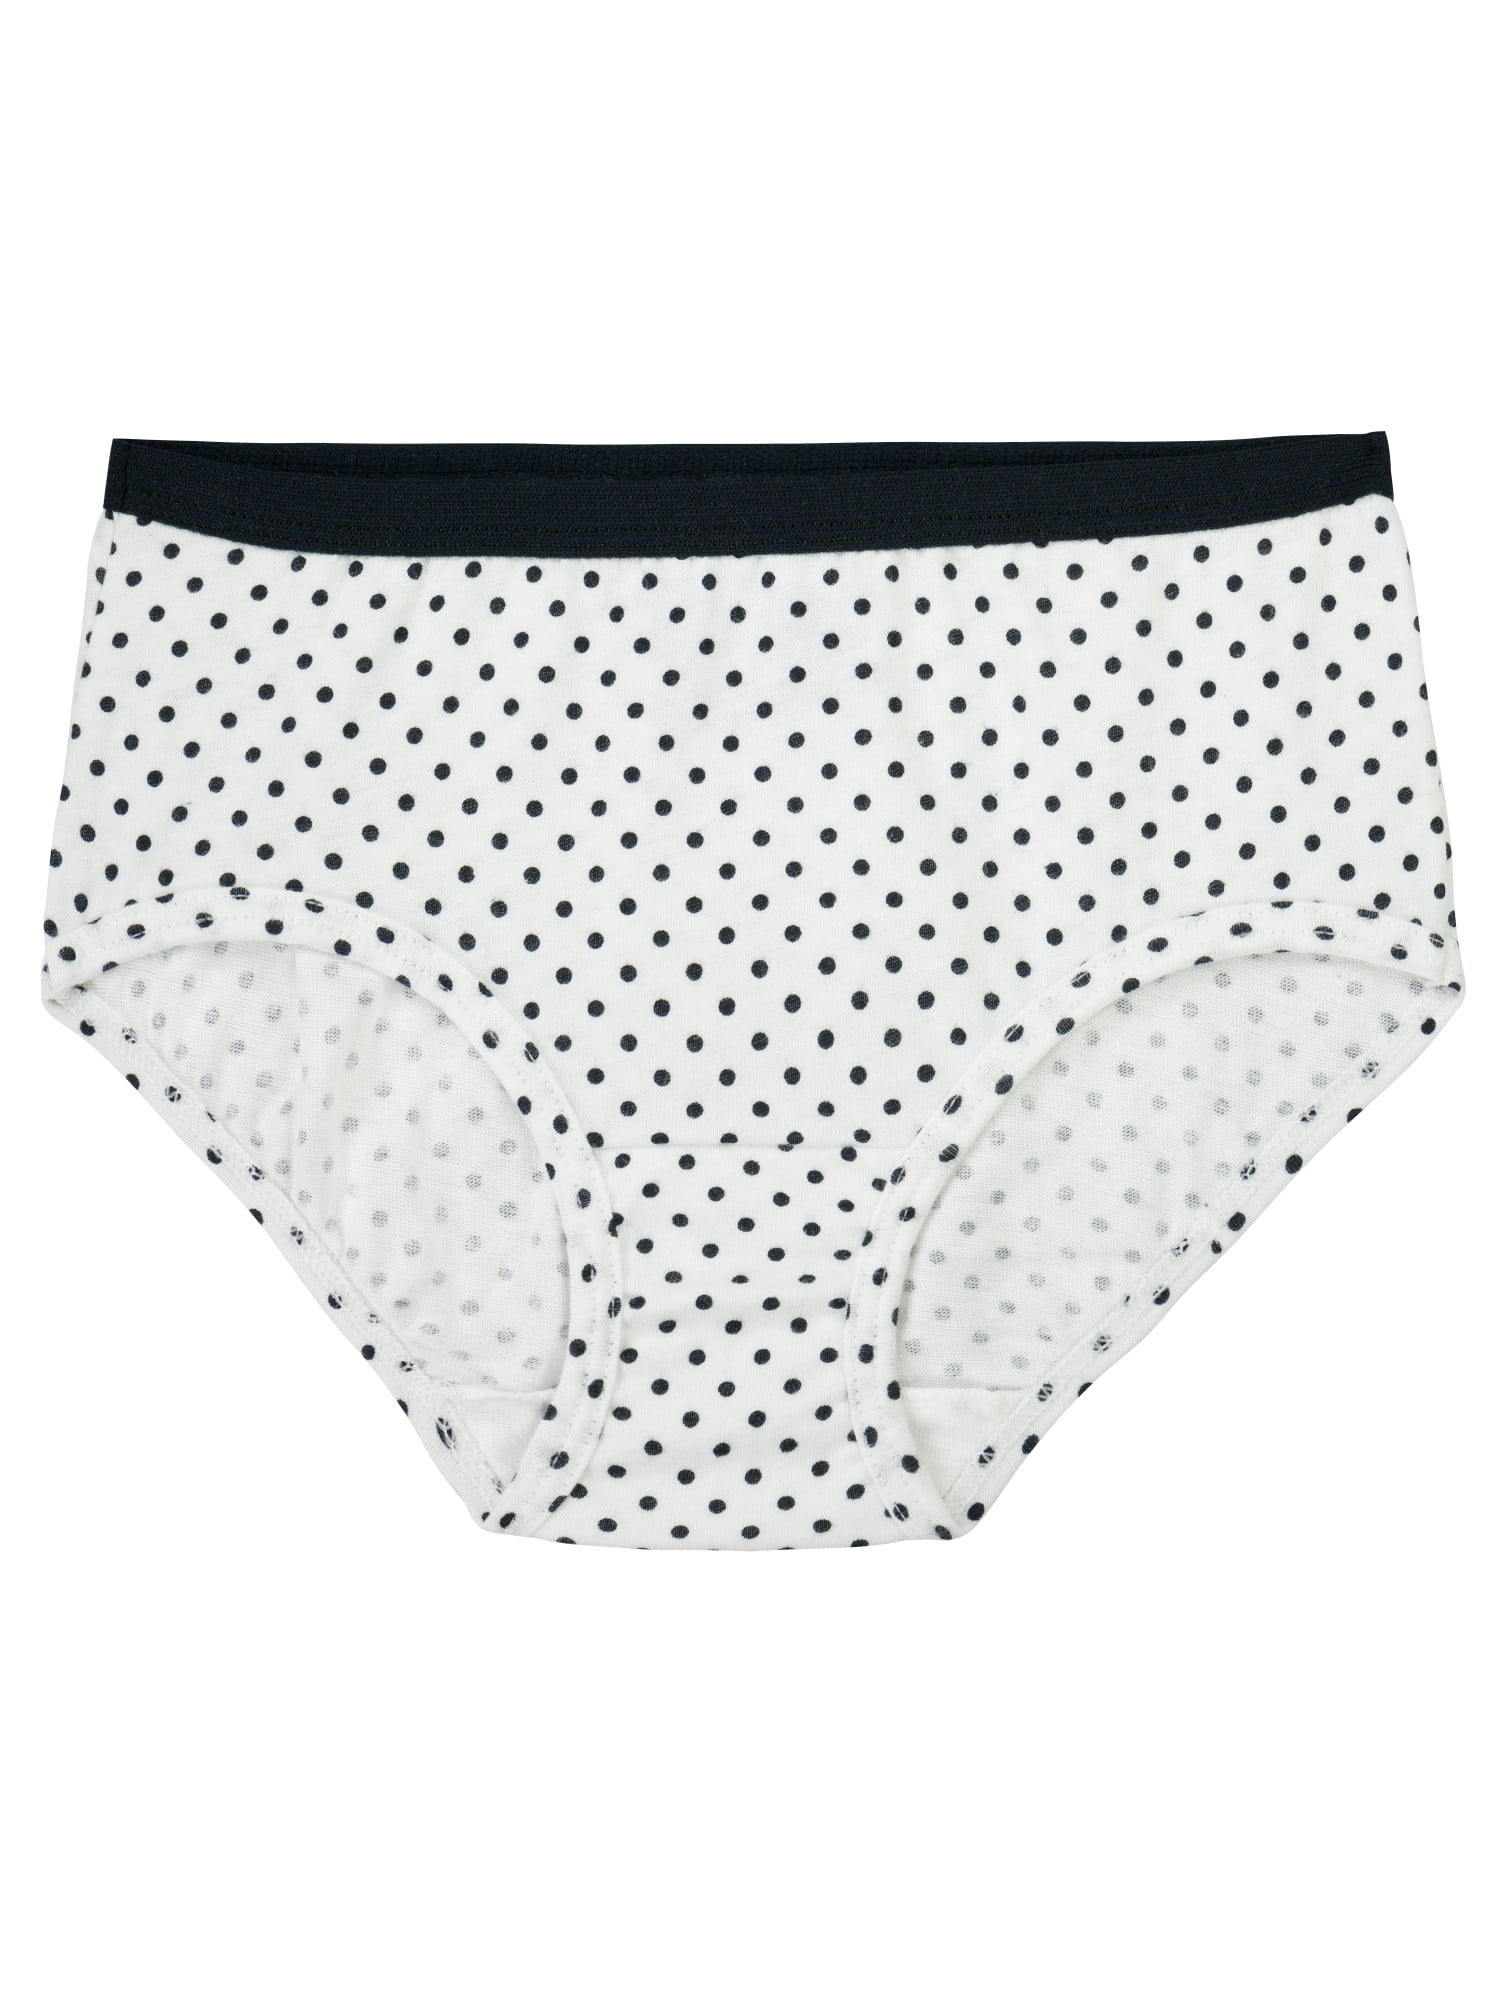 1 Pair Vintage Underwear Teenager Girls Cotton Panties Unused White  Underpants With Black Dot Pattern 100% Cotton 12 14 Years 